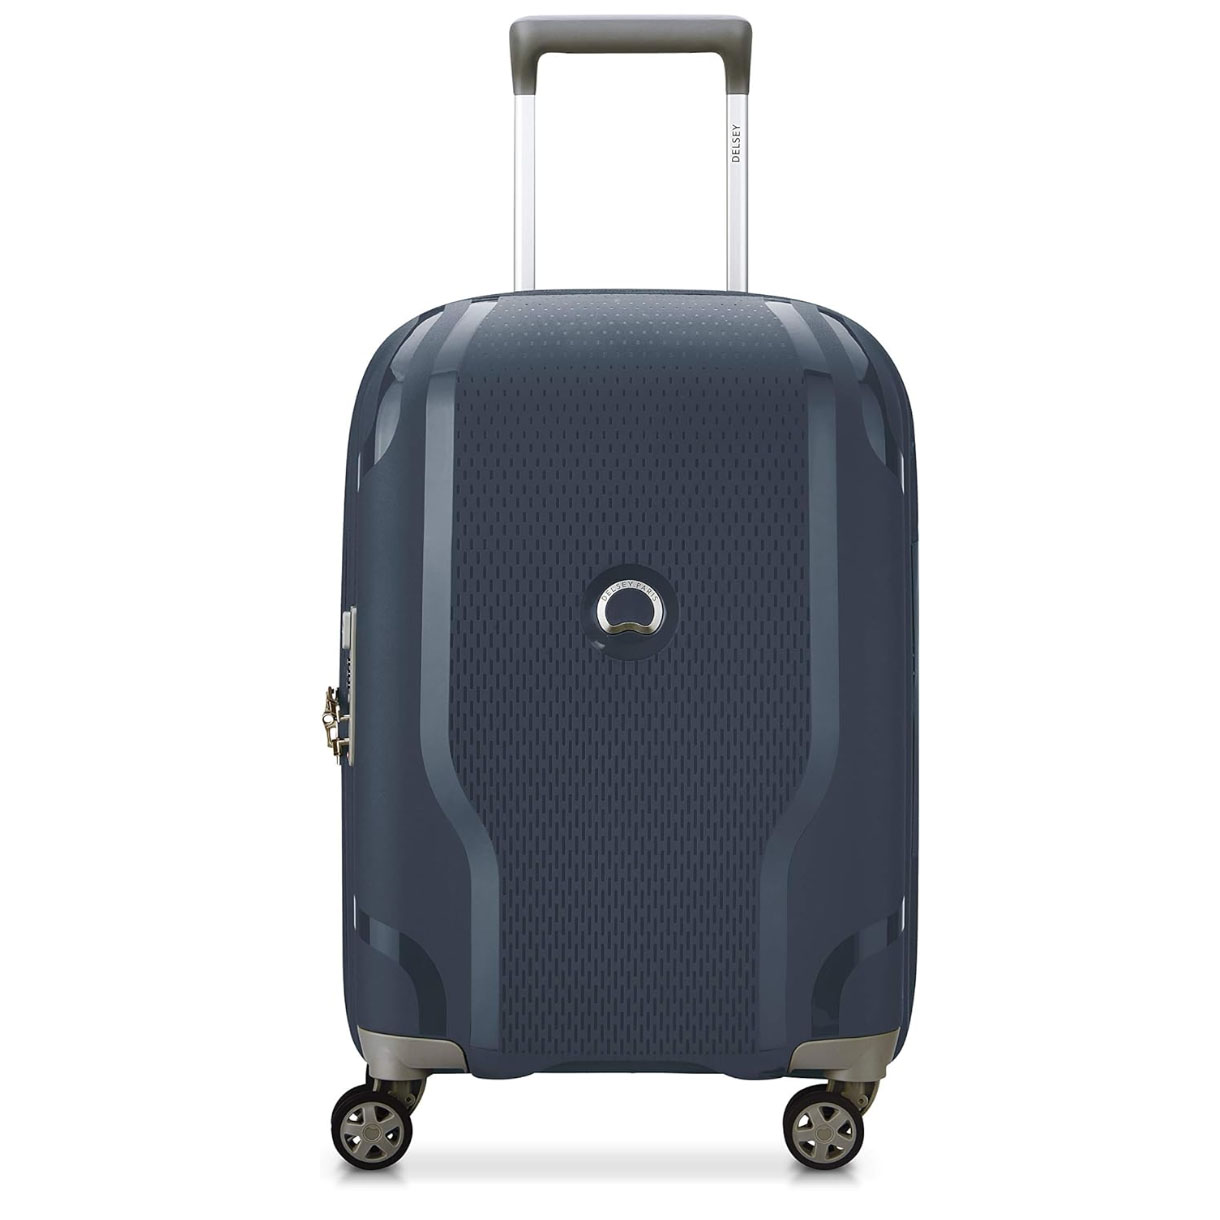 Dark grey hardside luggage with spinner wheels